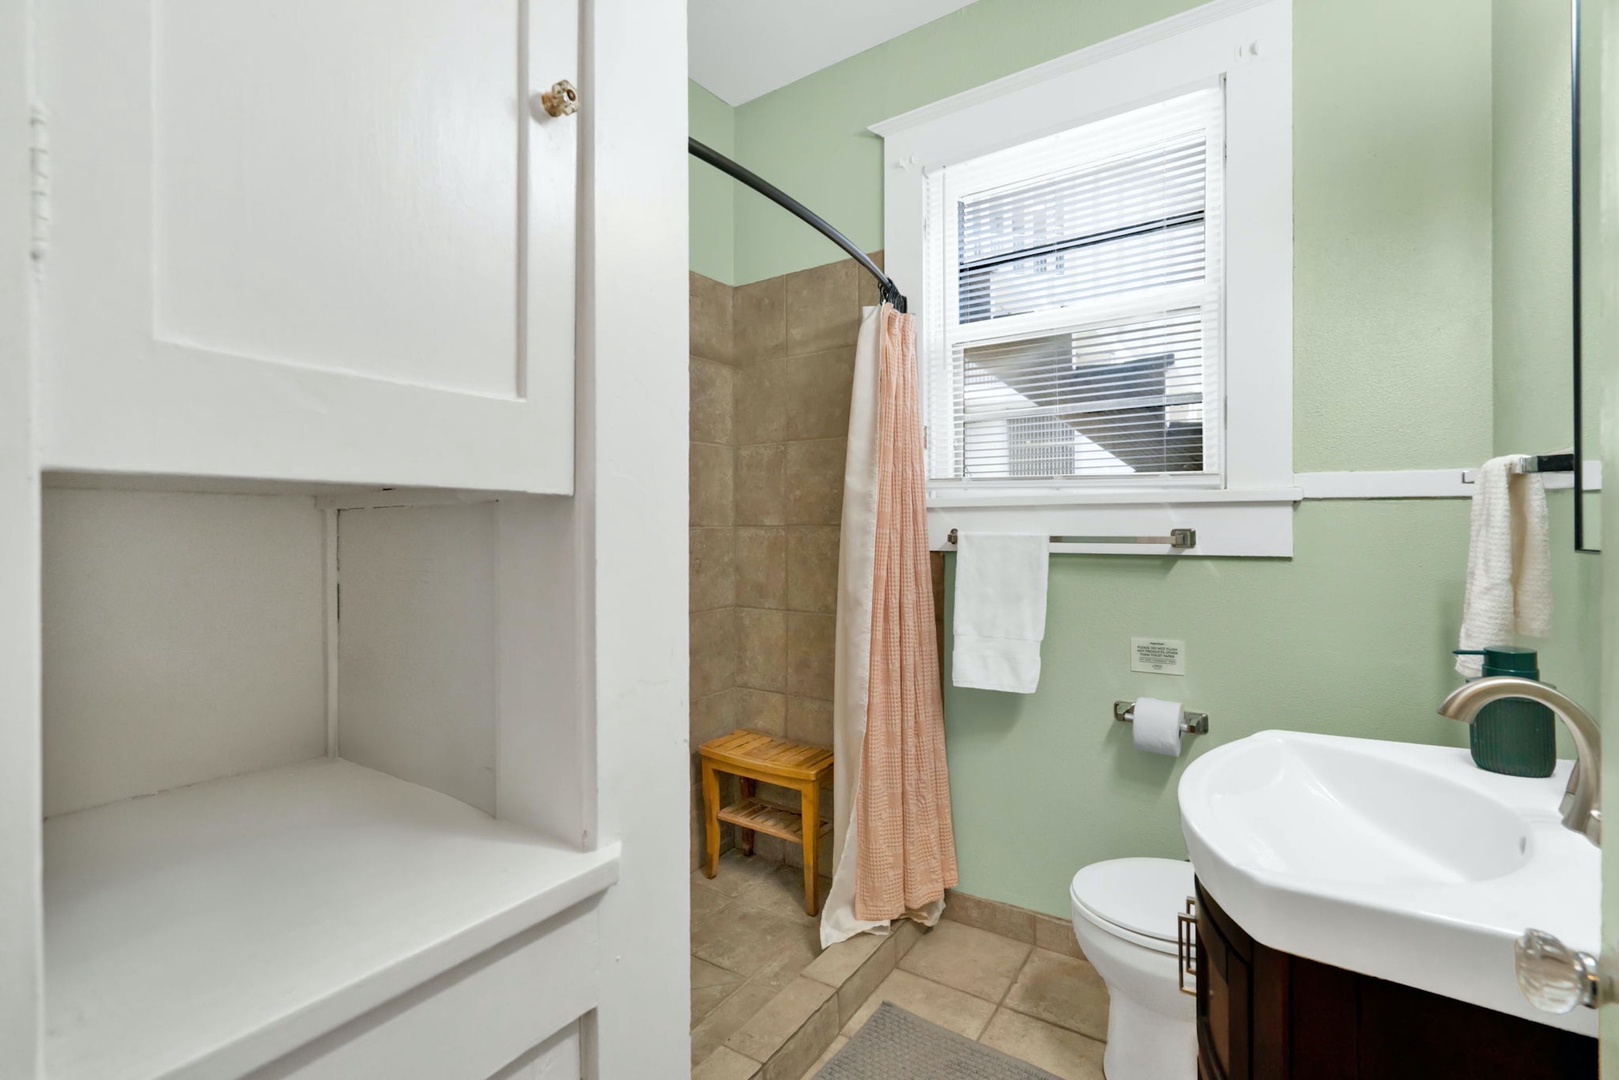 The full bathroom features a sleek single vanity & walk-in shower